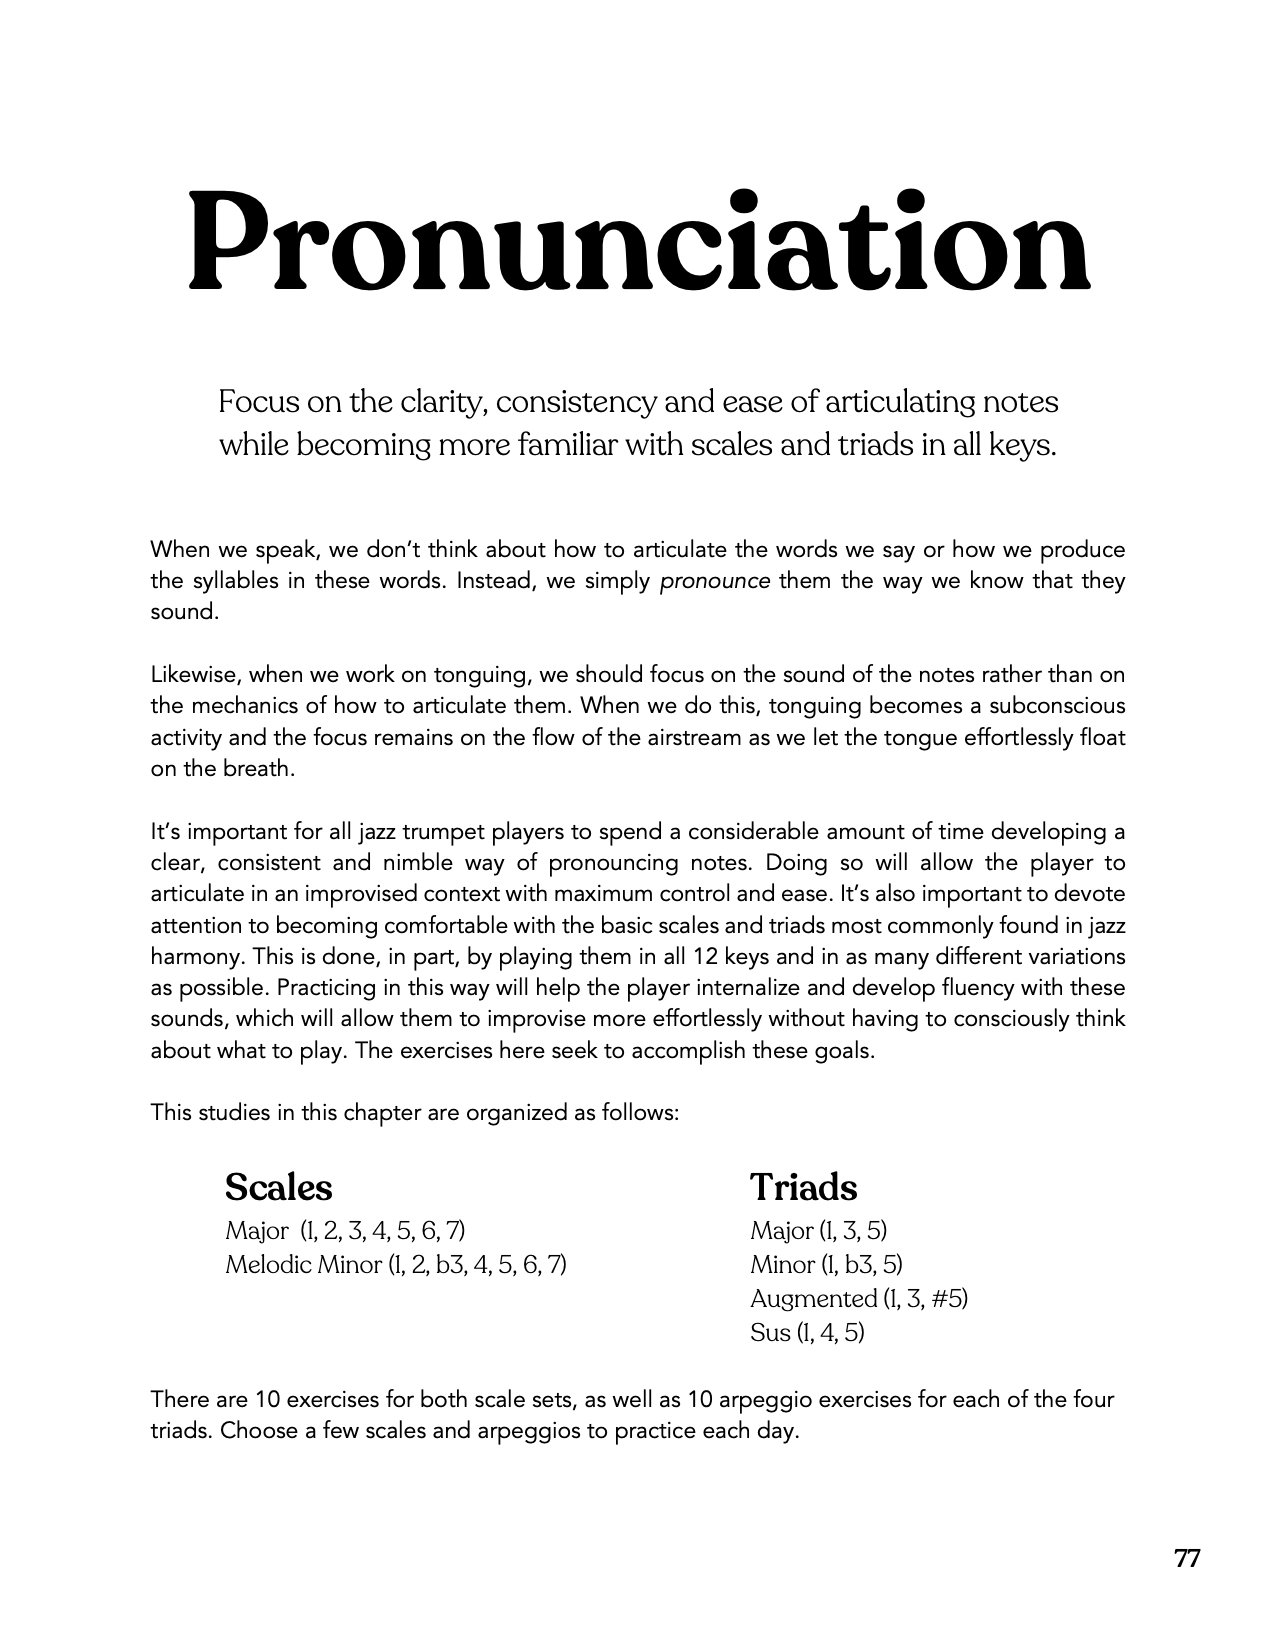 Pronunciation Cover Page.jpg